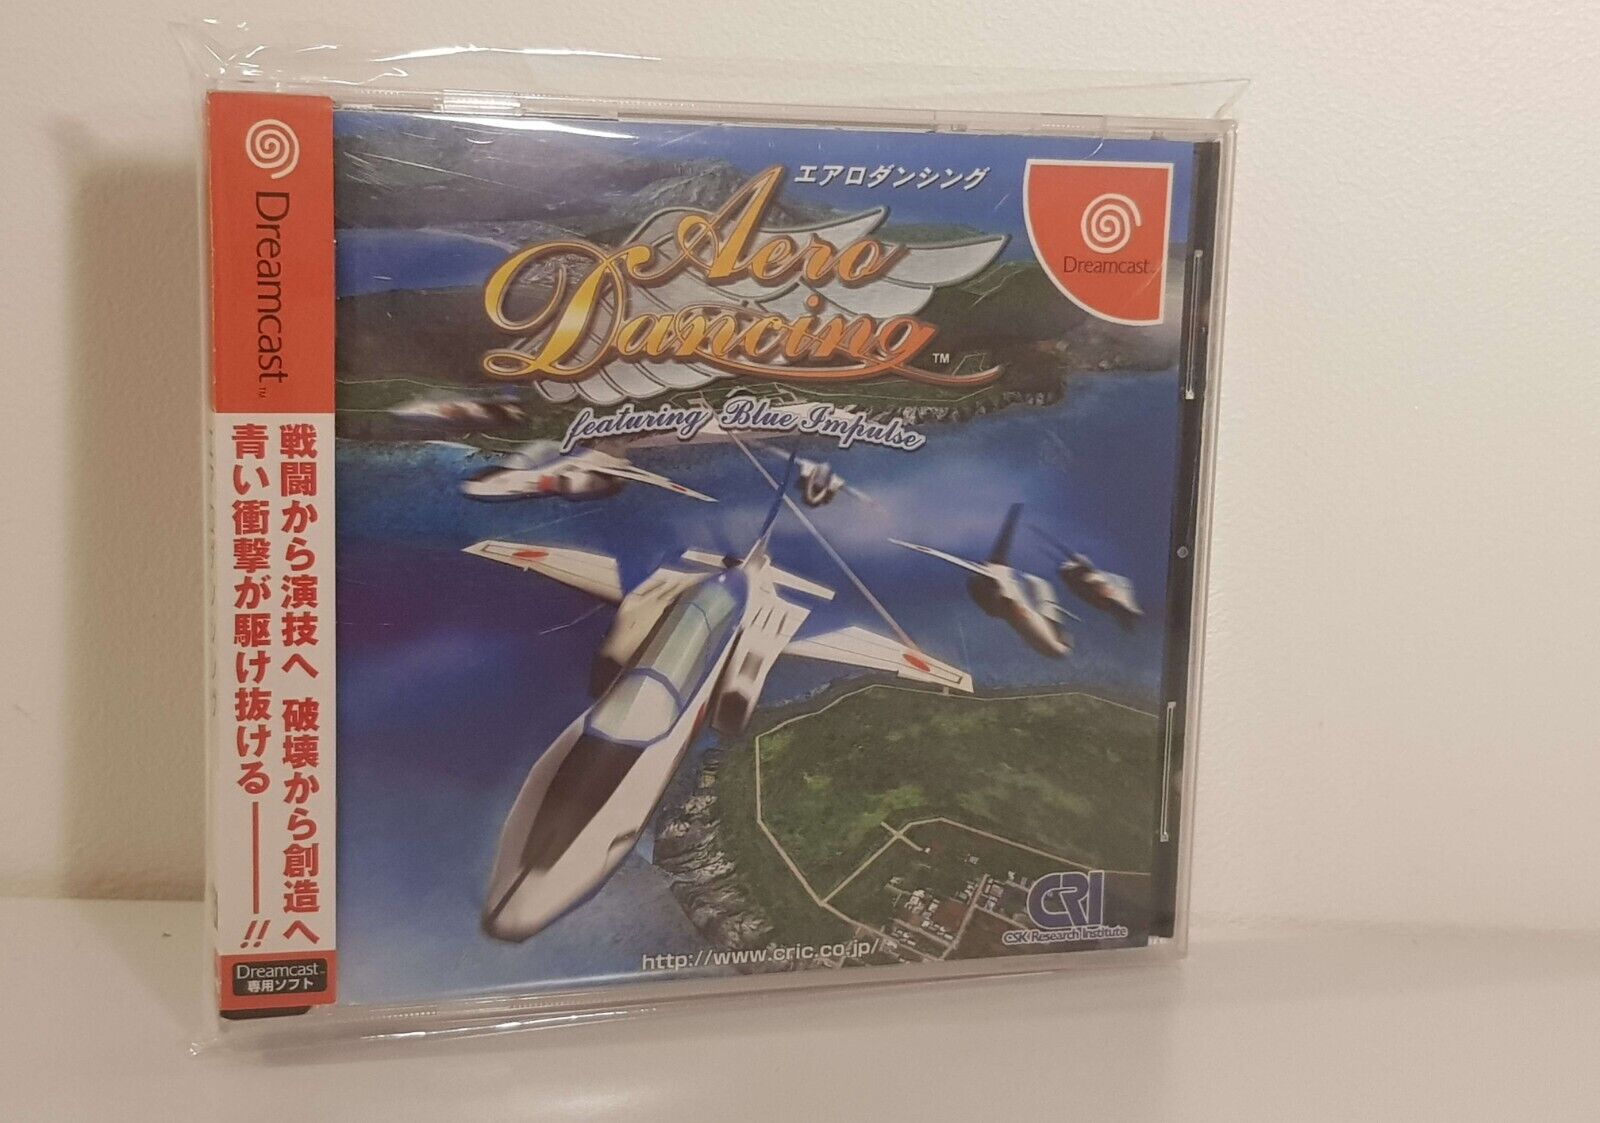 Aero Dancing featuring Blue Impulse Dreamcast Jap avec Spin Card